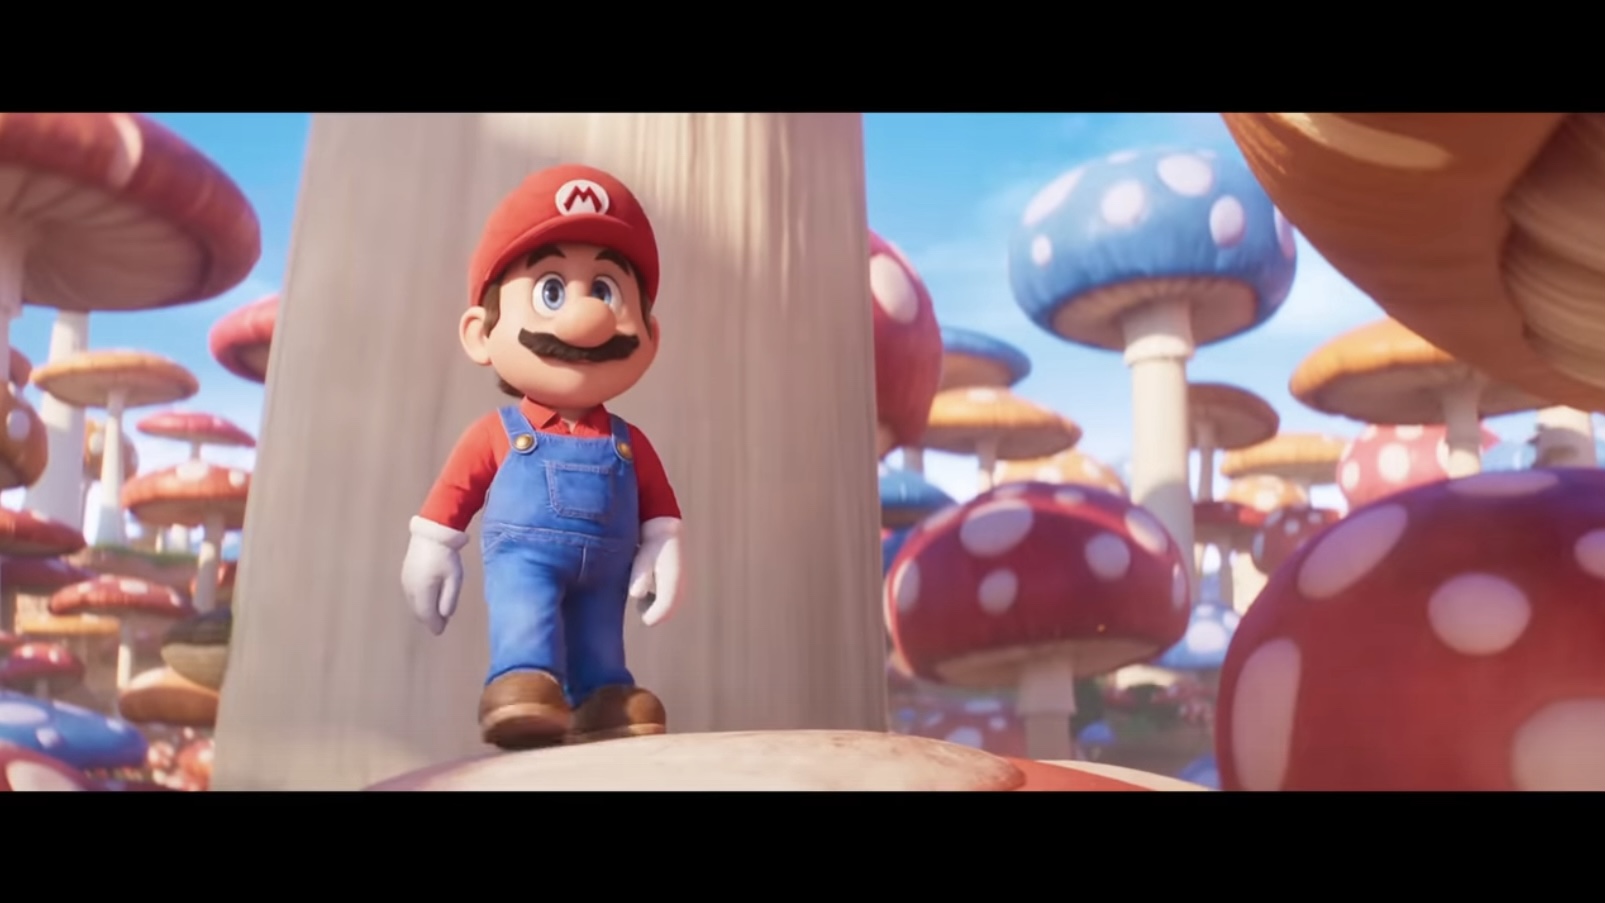 Here's a Second The Super Mario Bros Movie Trailer